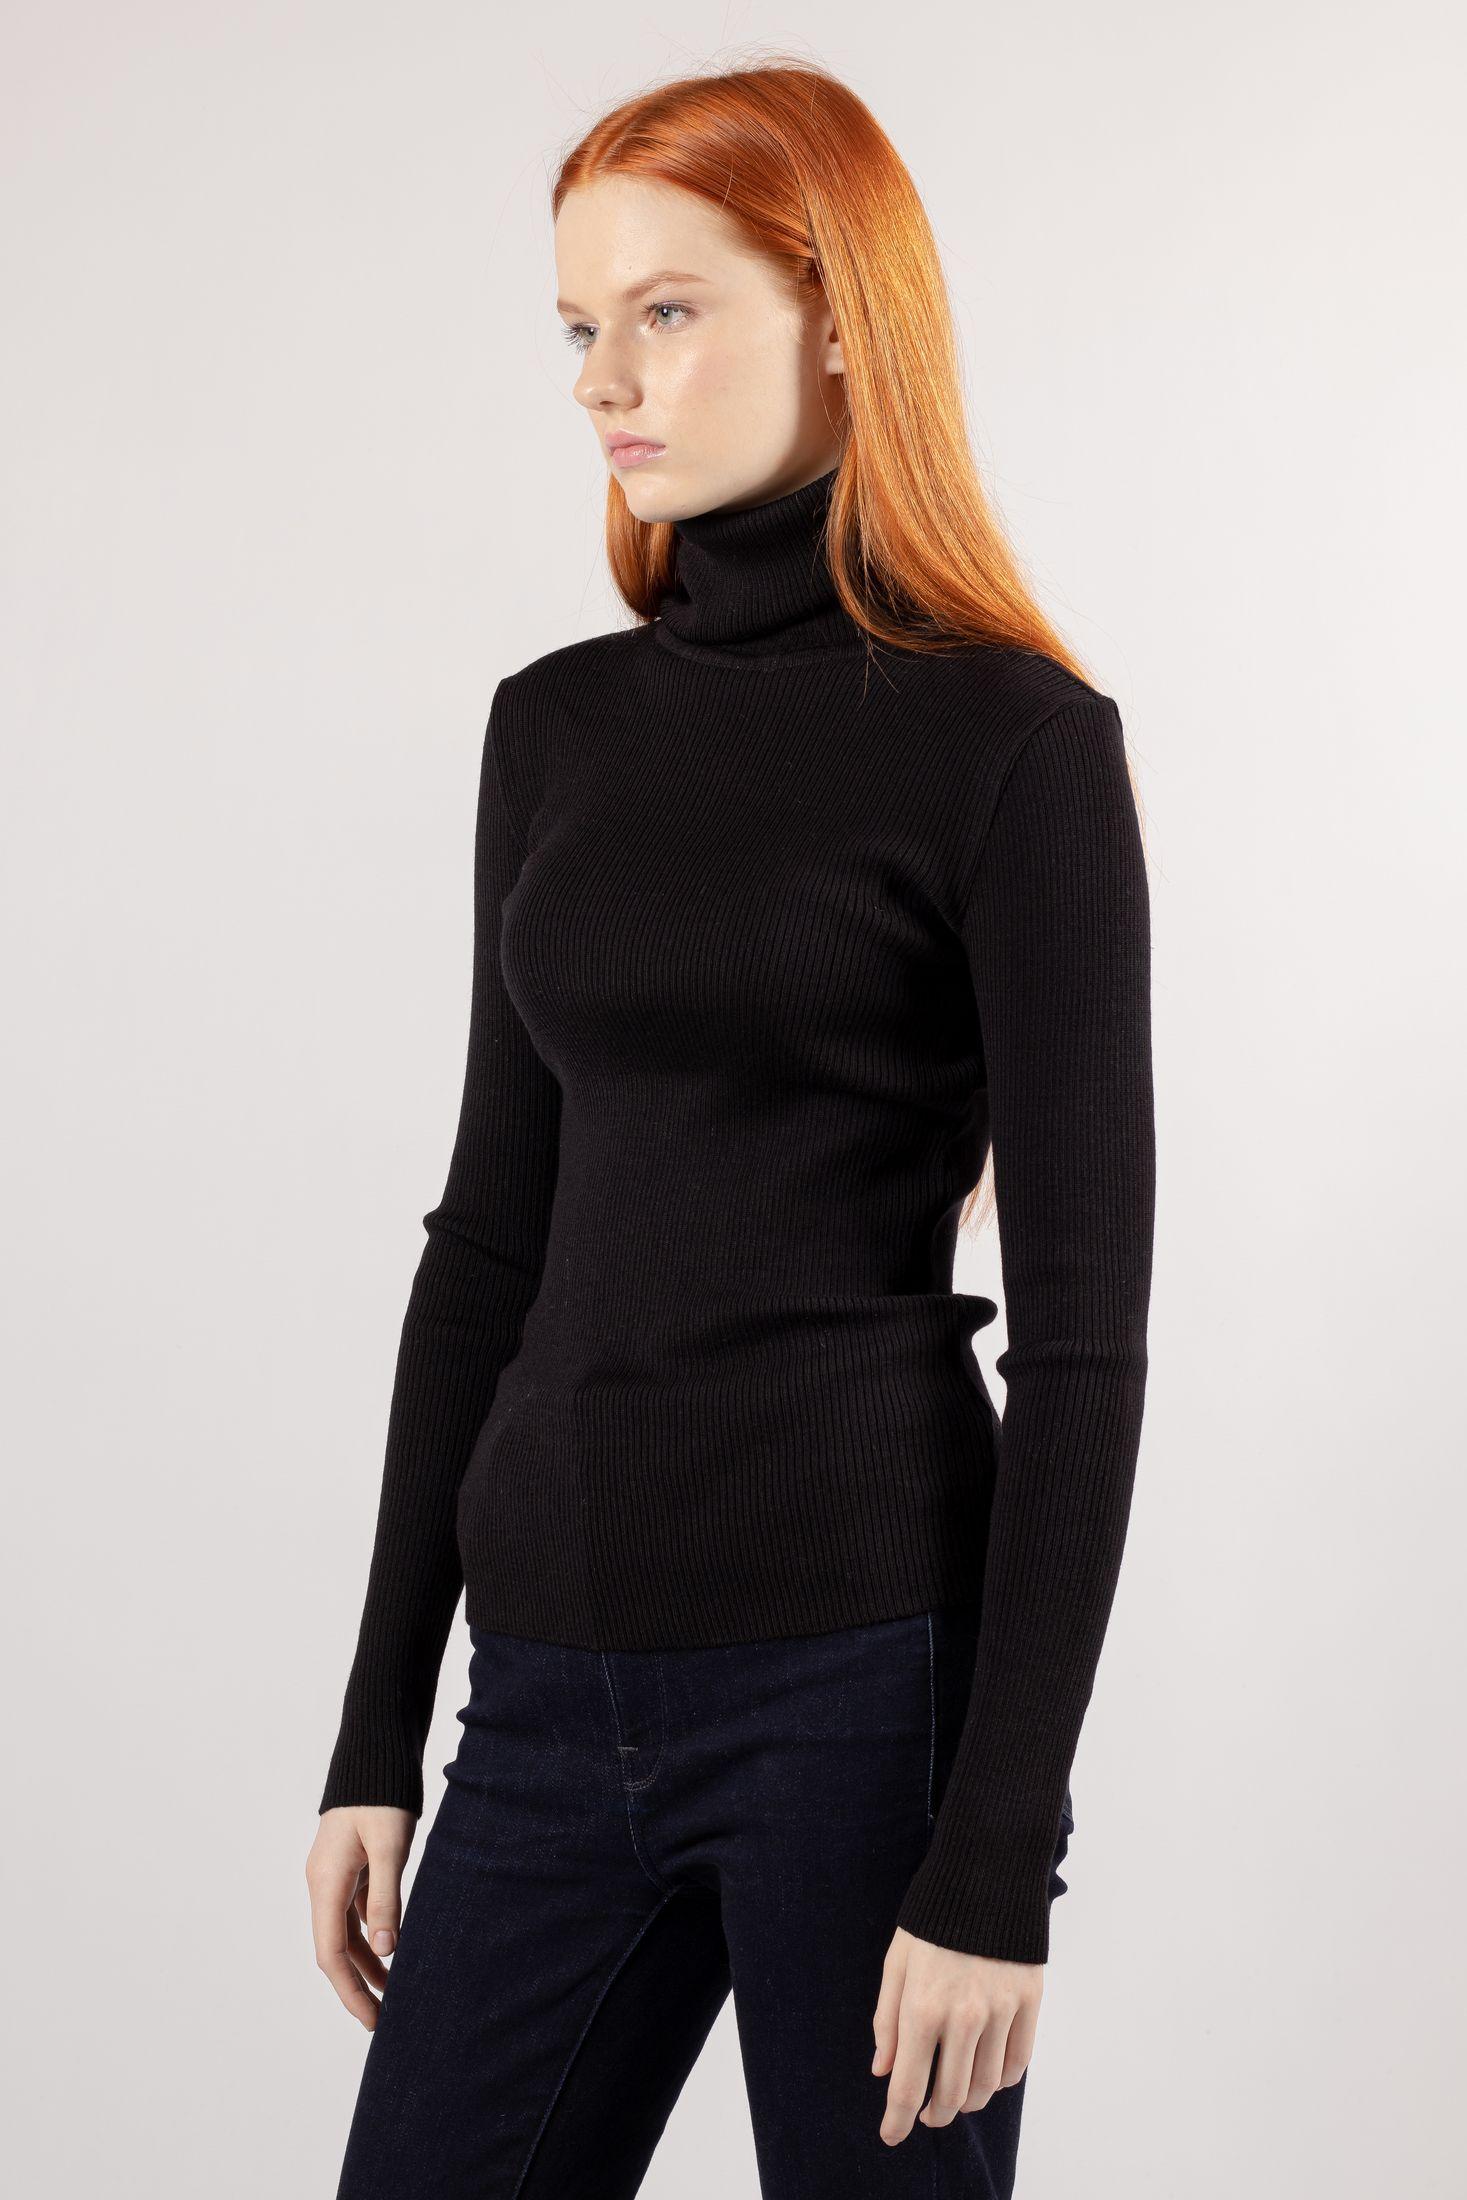 HELGA Essentials: Versatile Black Merino Turtleneck Sweater